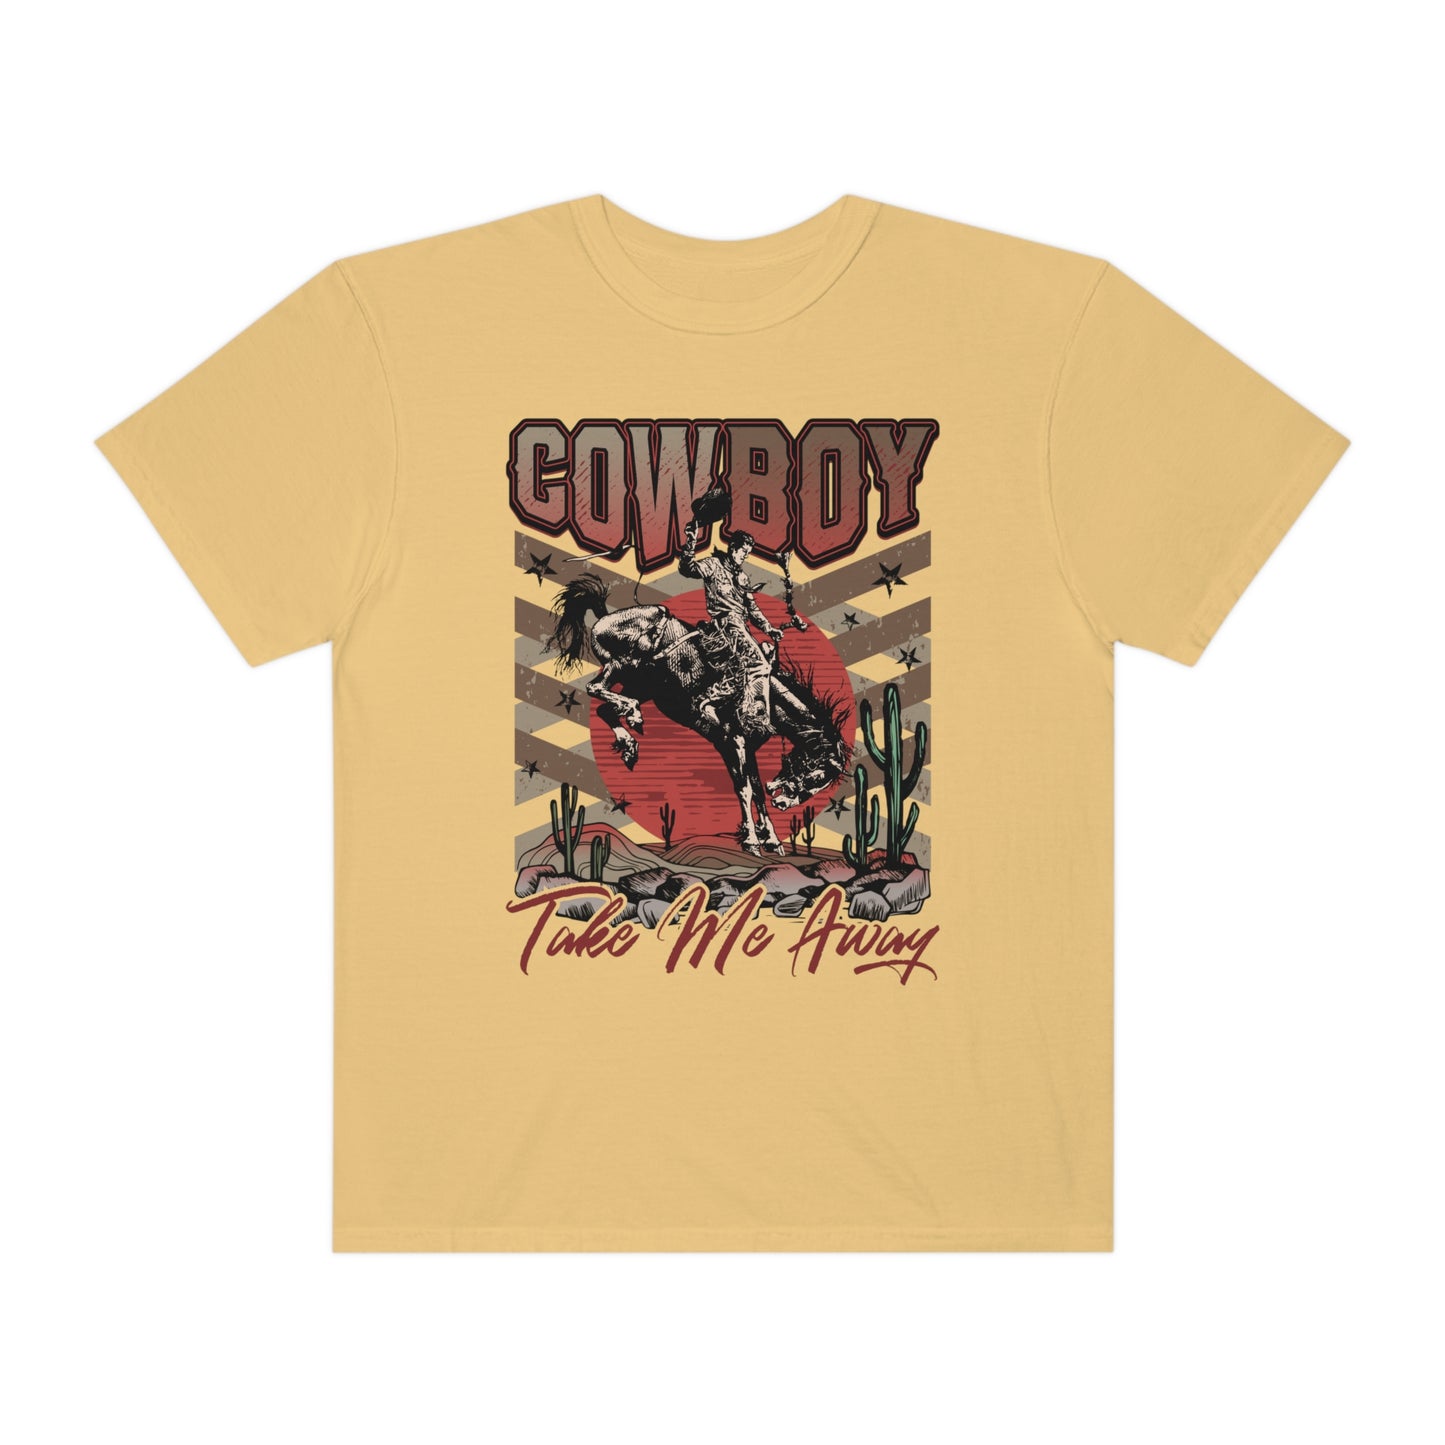 Cowboy Take Me Away Shirt